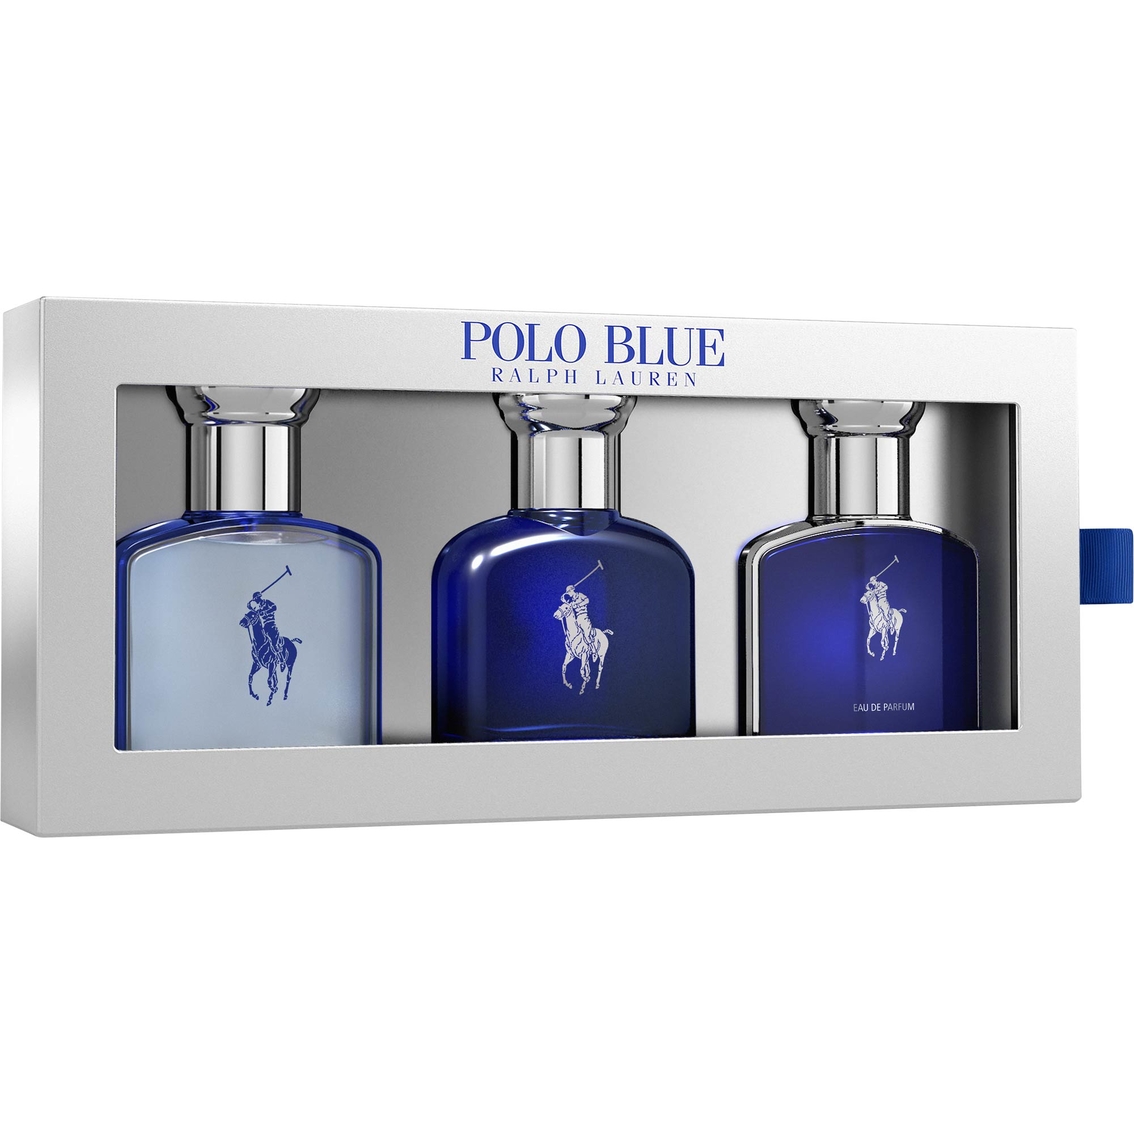 polo blue gift set